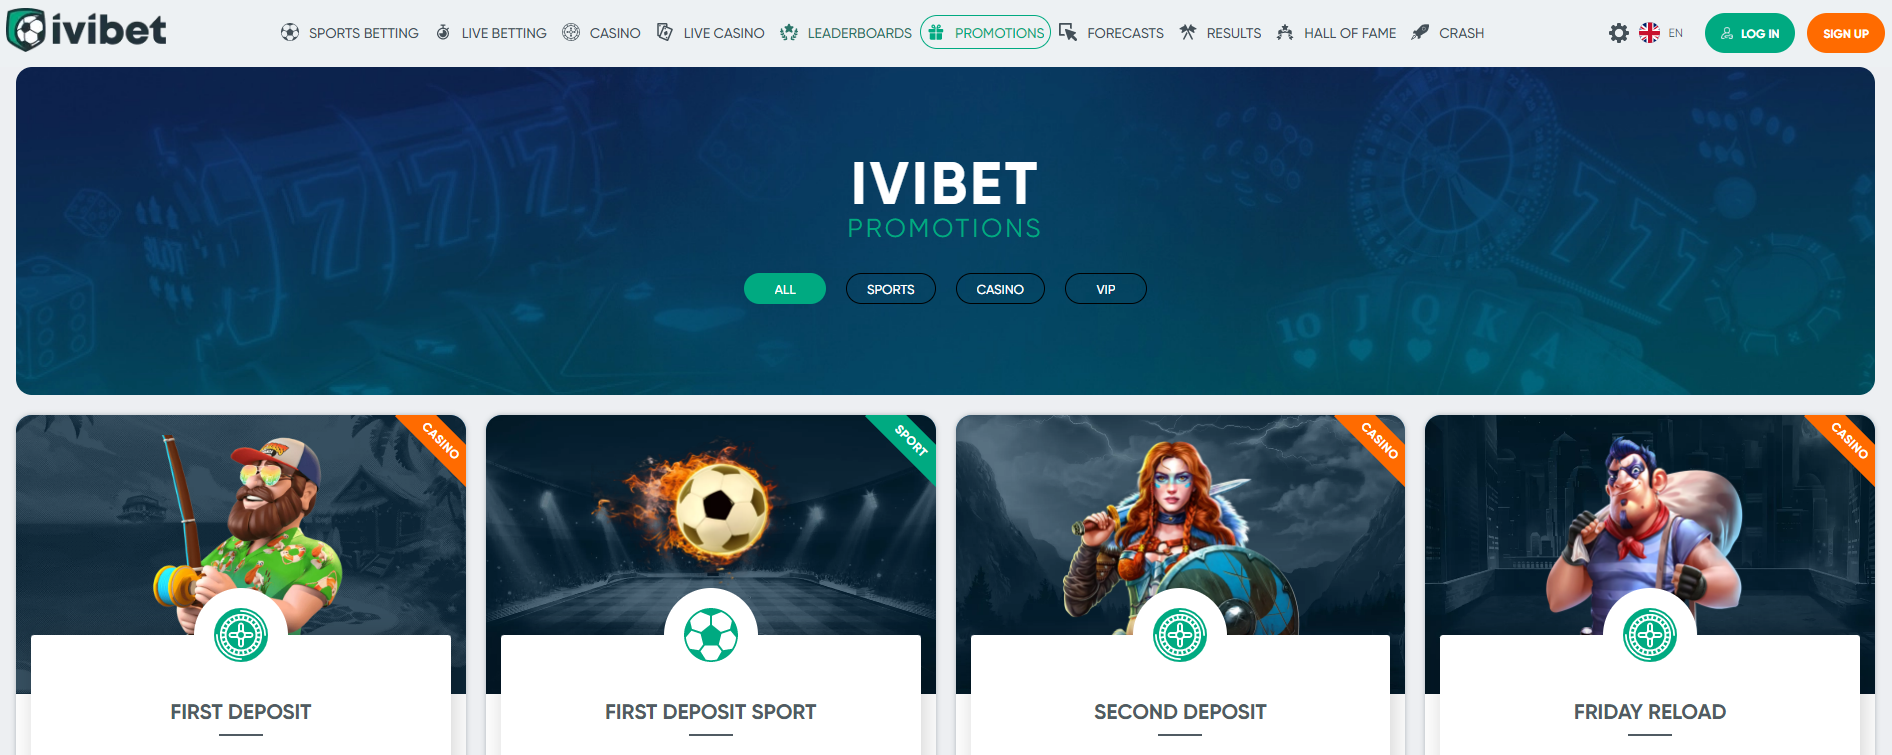 ivibet.com